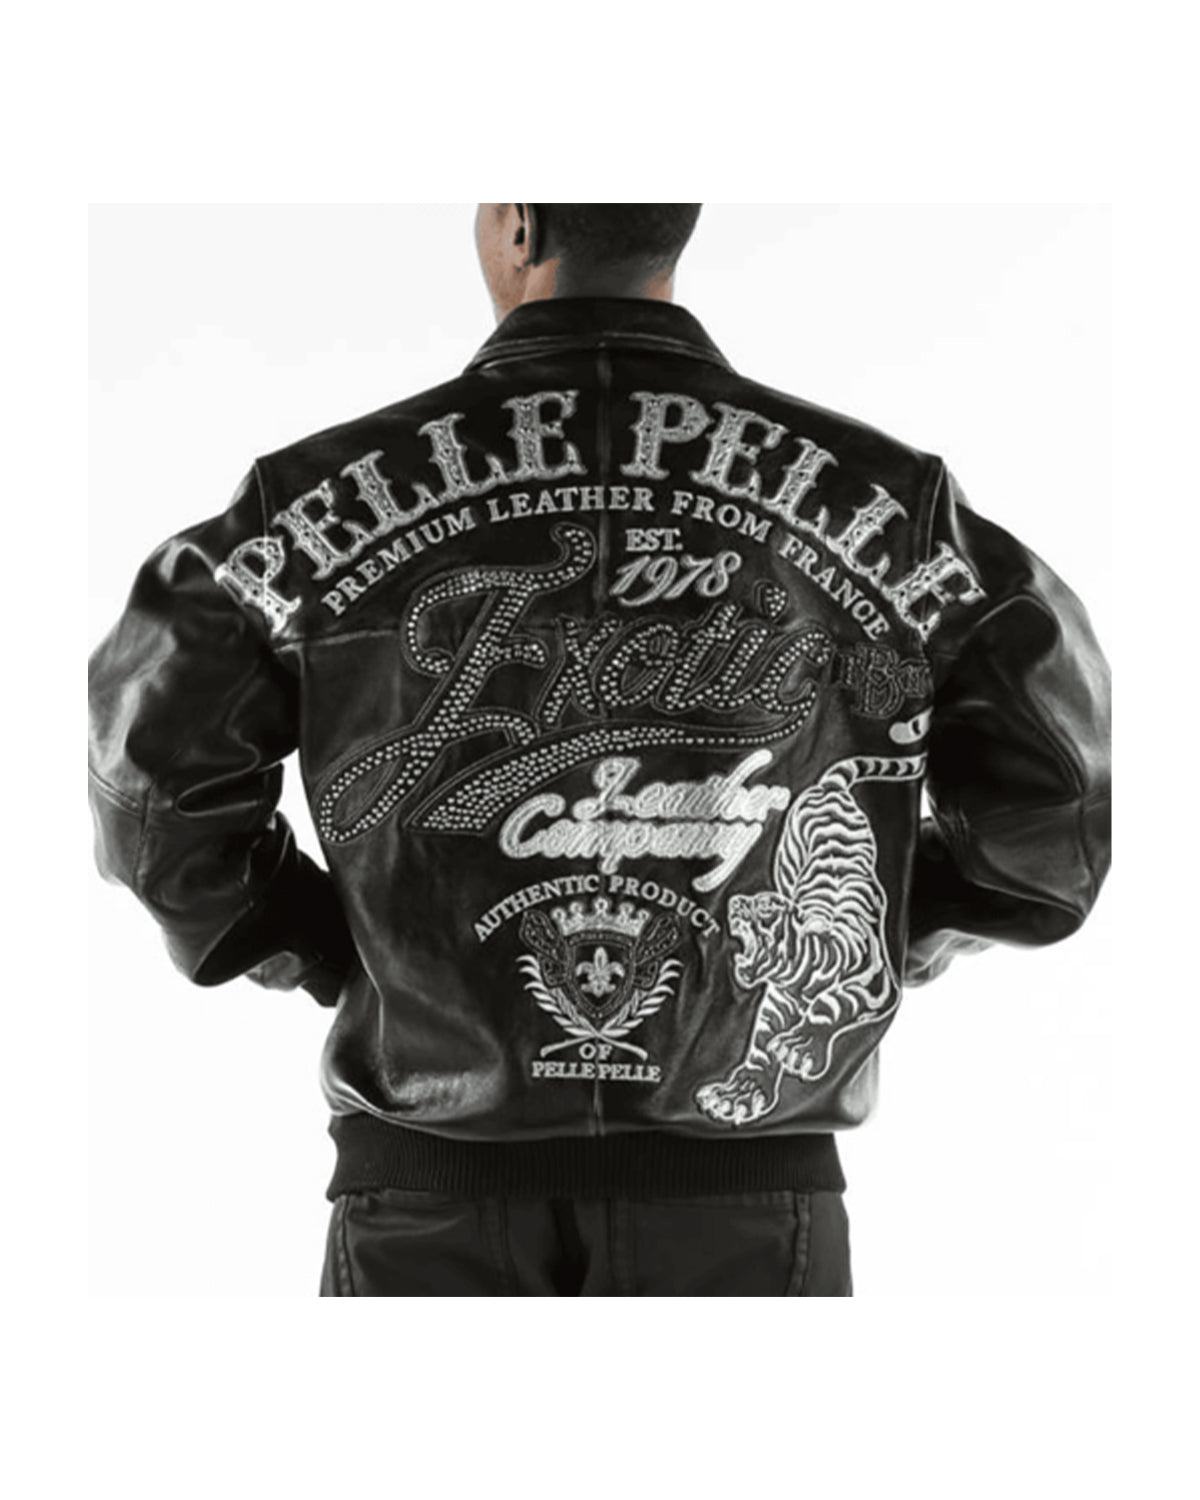 Elite Pelle Pelle Premium Leather Est 1978 Exotic Jacket